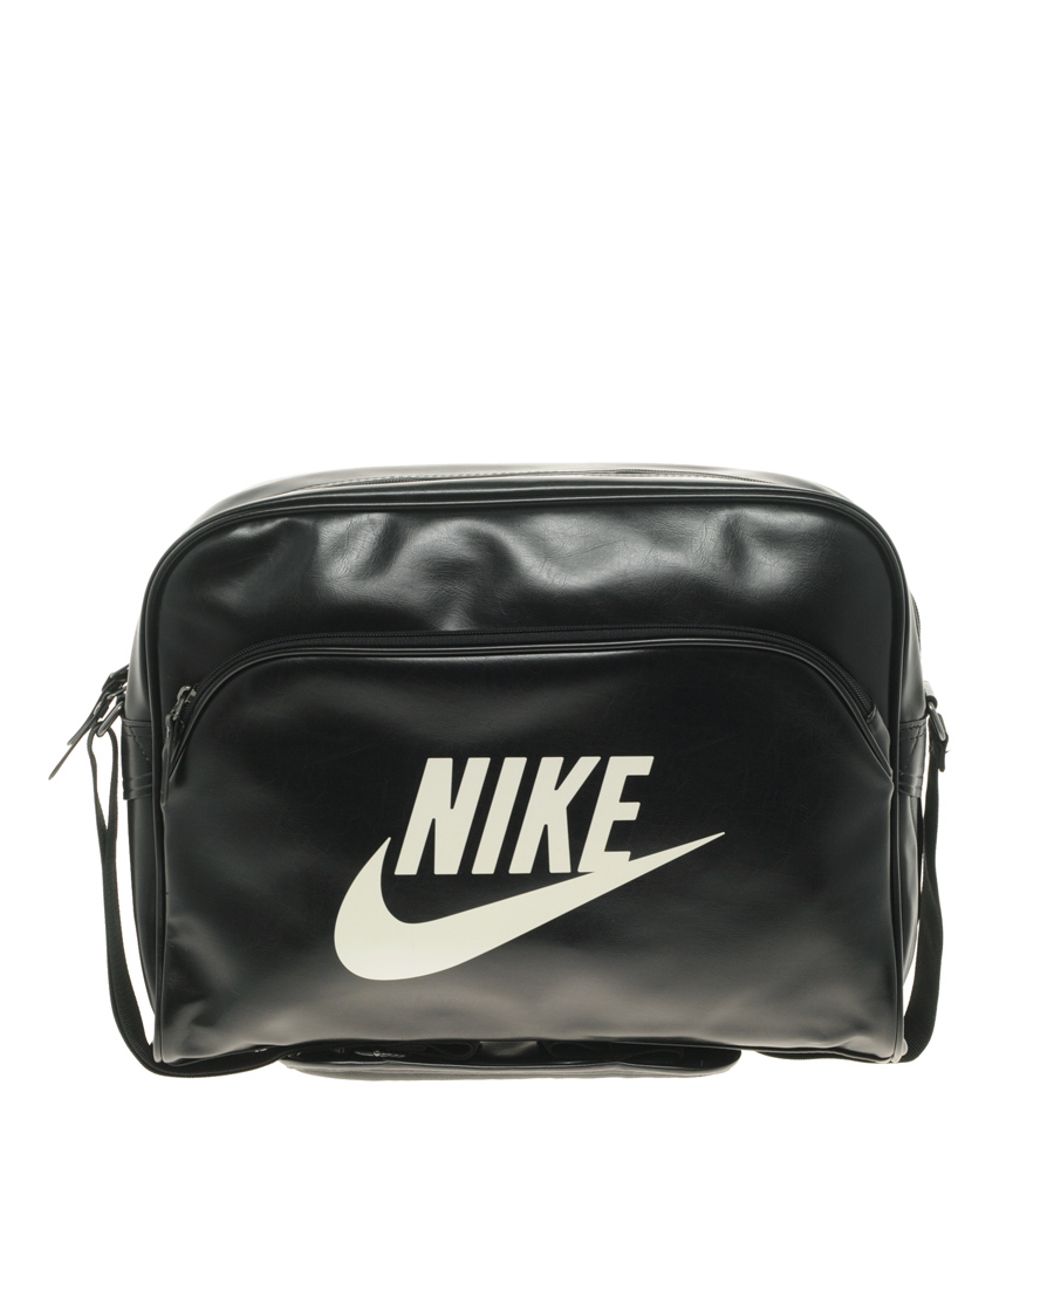 Nike Heritage Messenger Bag in for | Lyst